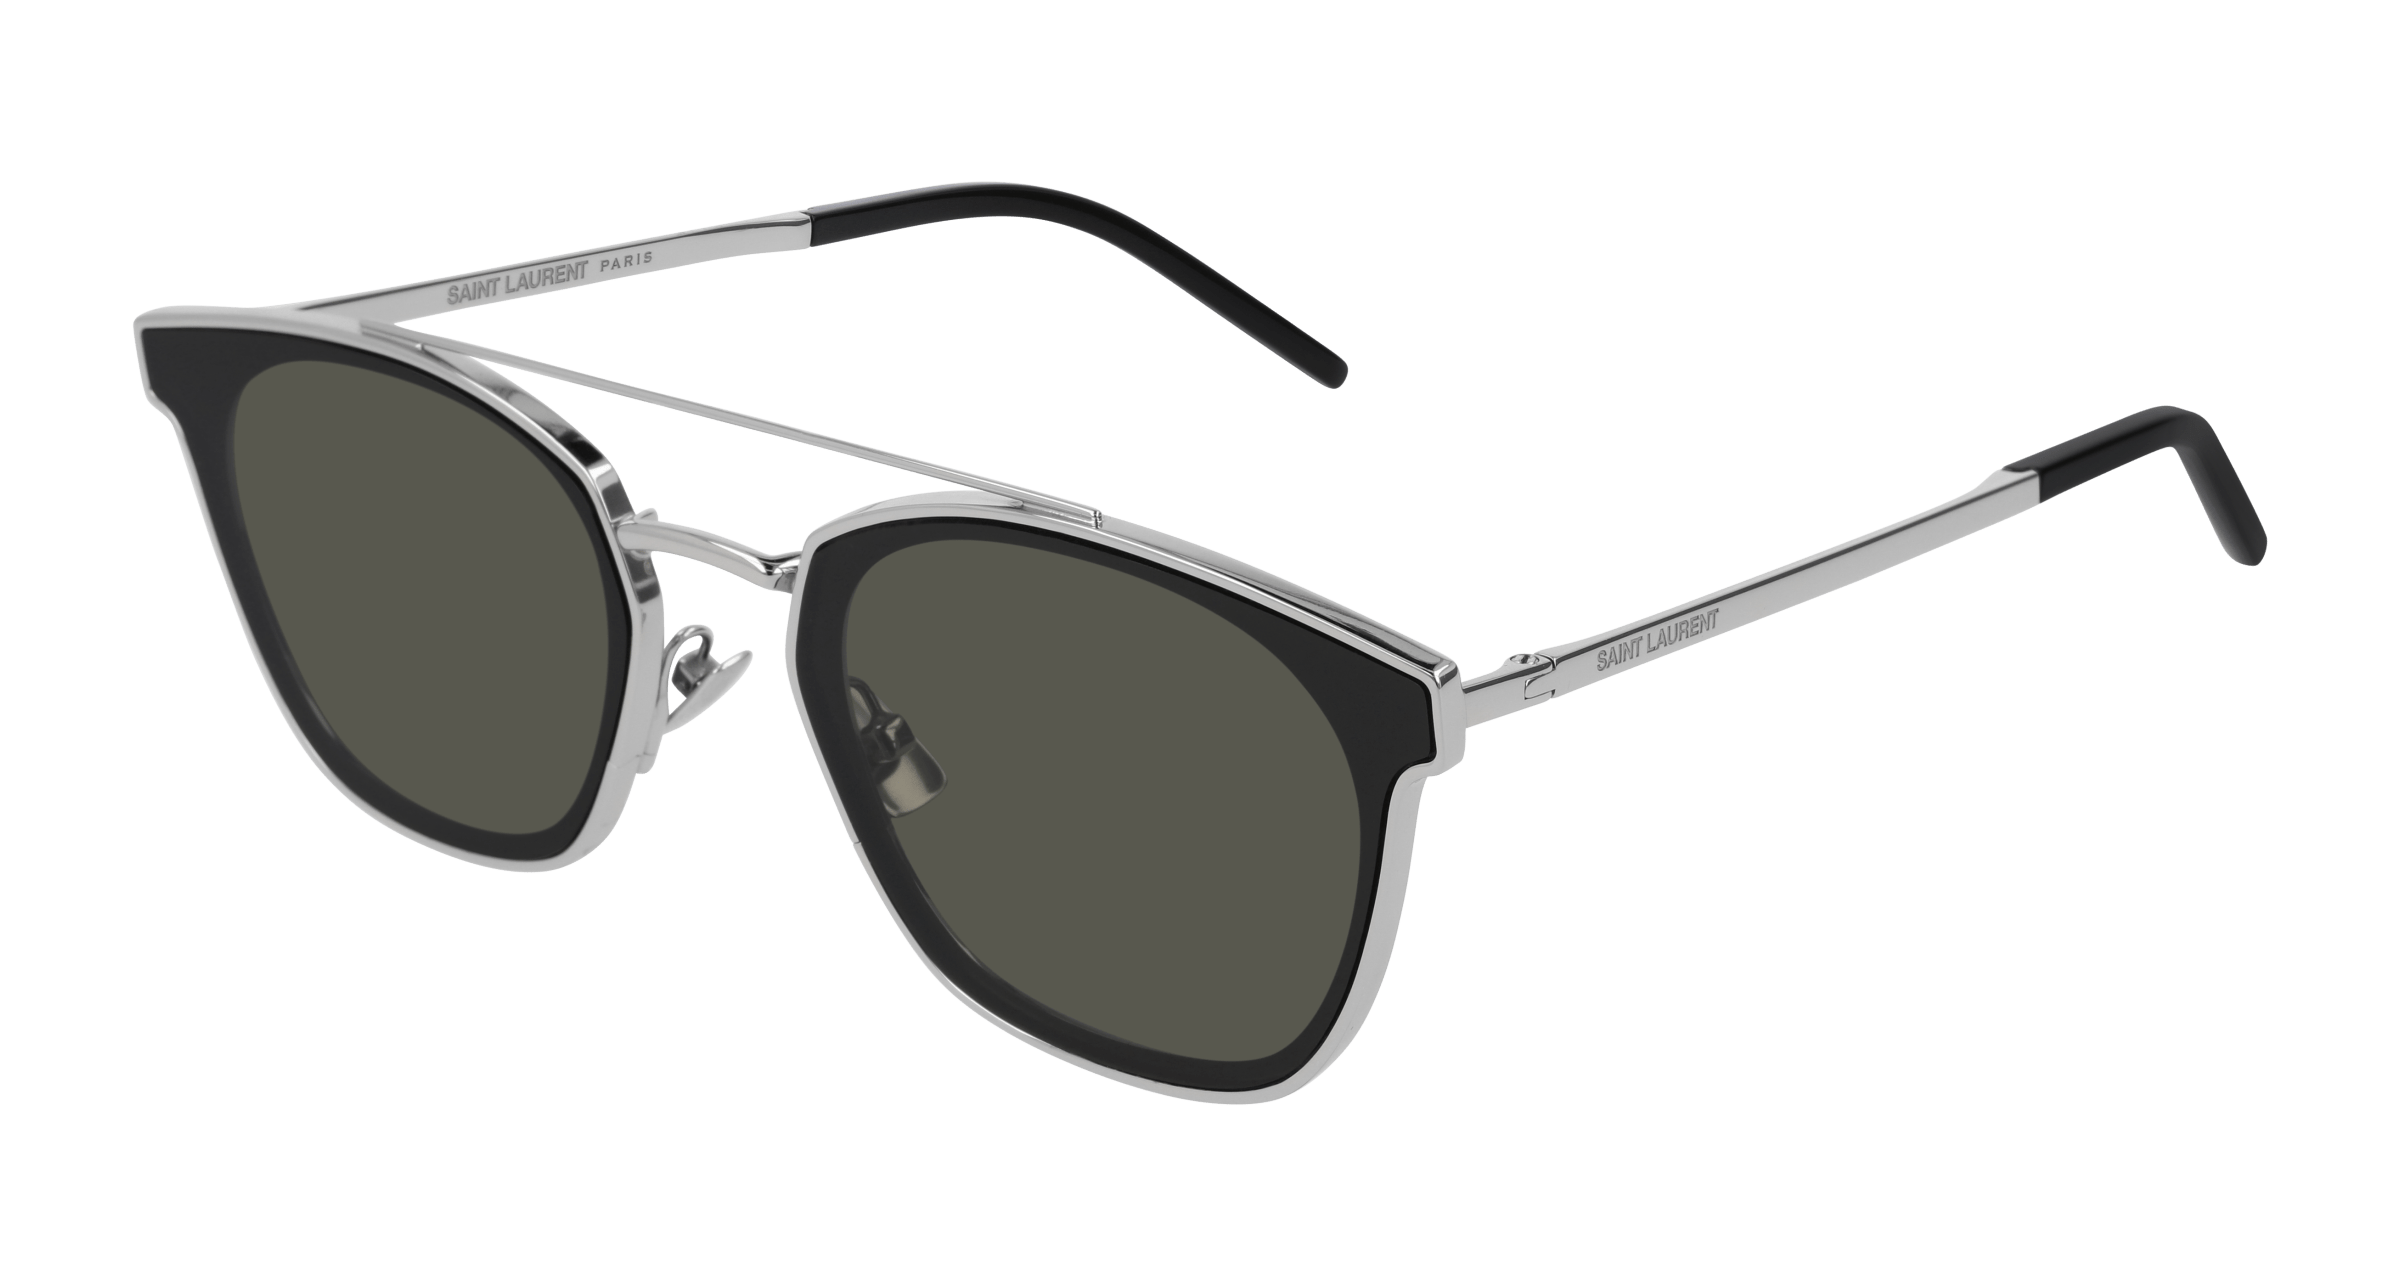 Sunglasses Online - Amevista